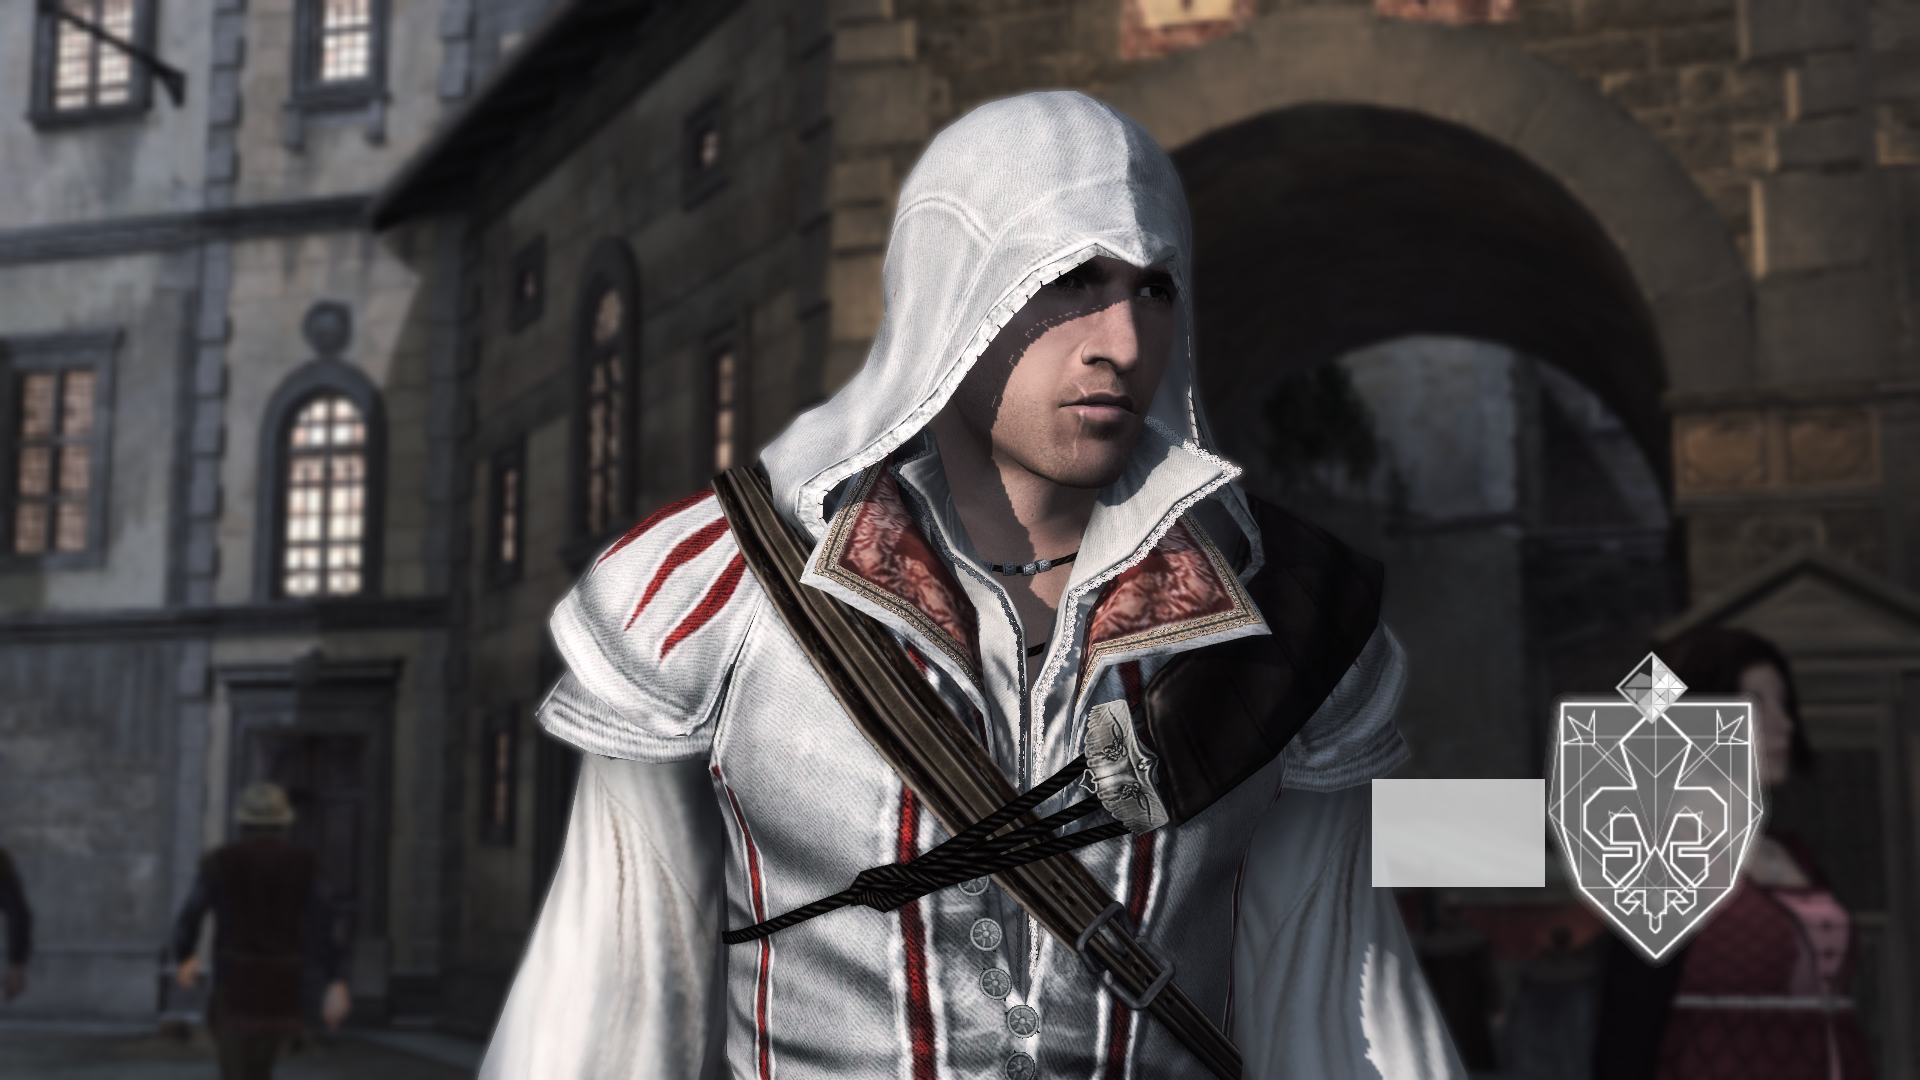 Assassins creed 3 mods. Assassin's Creed 2 Brotherhood. Плащ Медичи Assassins Creed 2. Ассасин Крид братство крови Эцио. Ассасин Крид 2 Эцио Аудиторе.